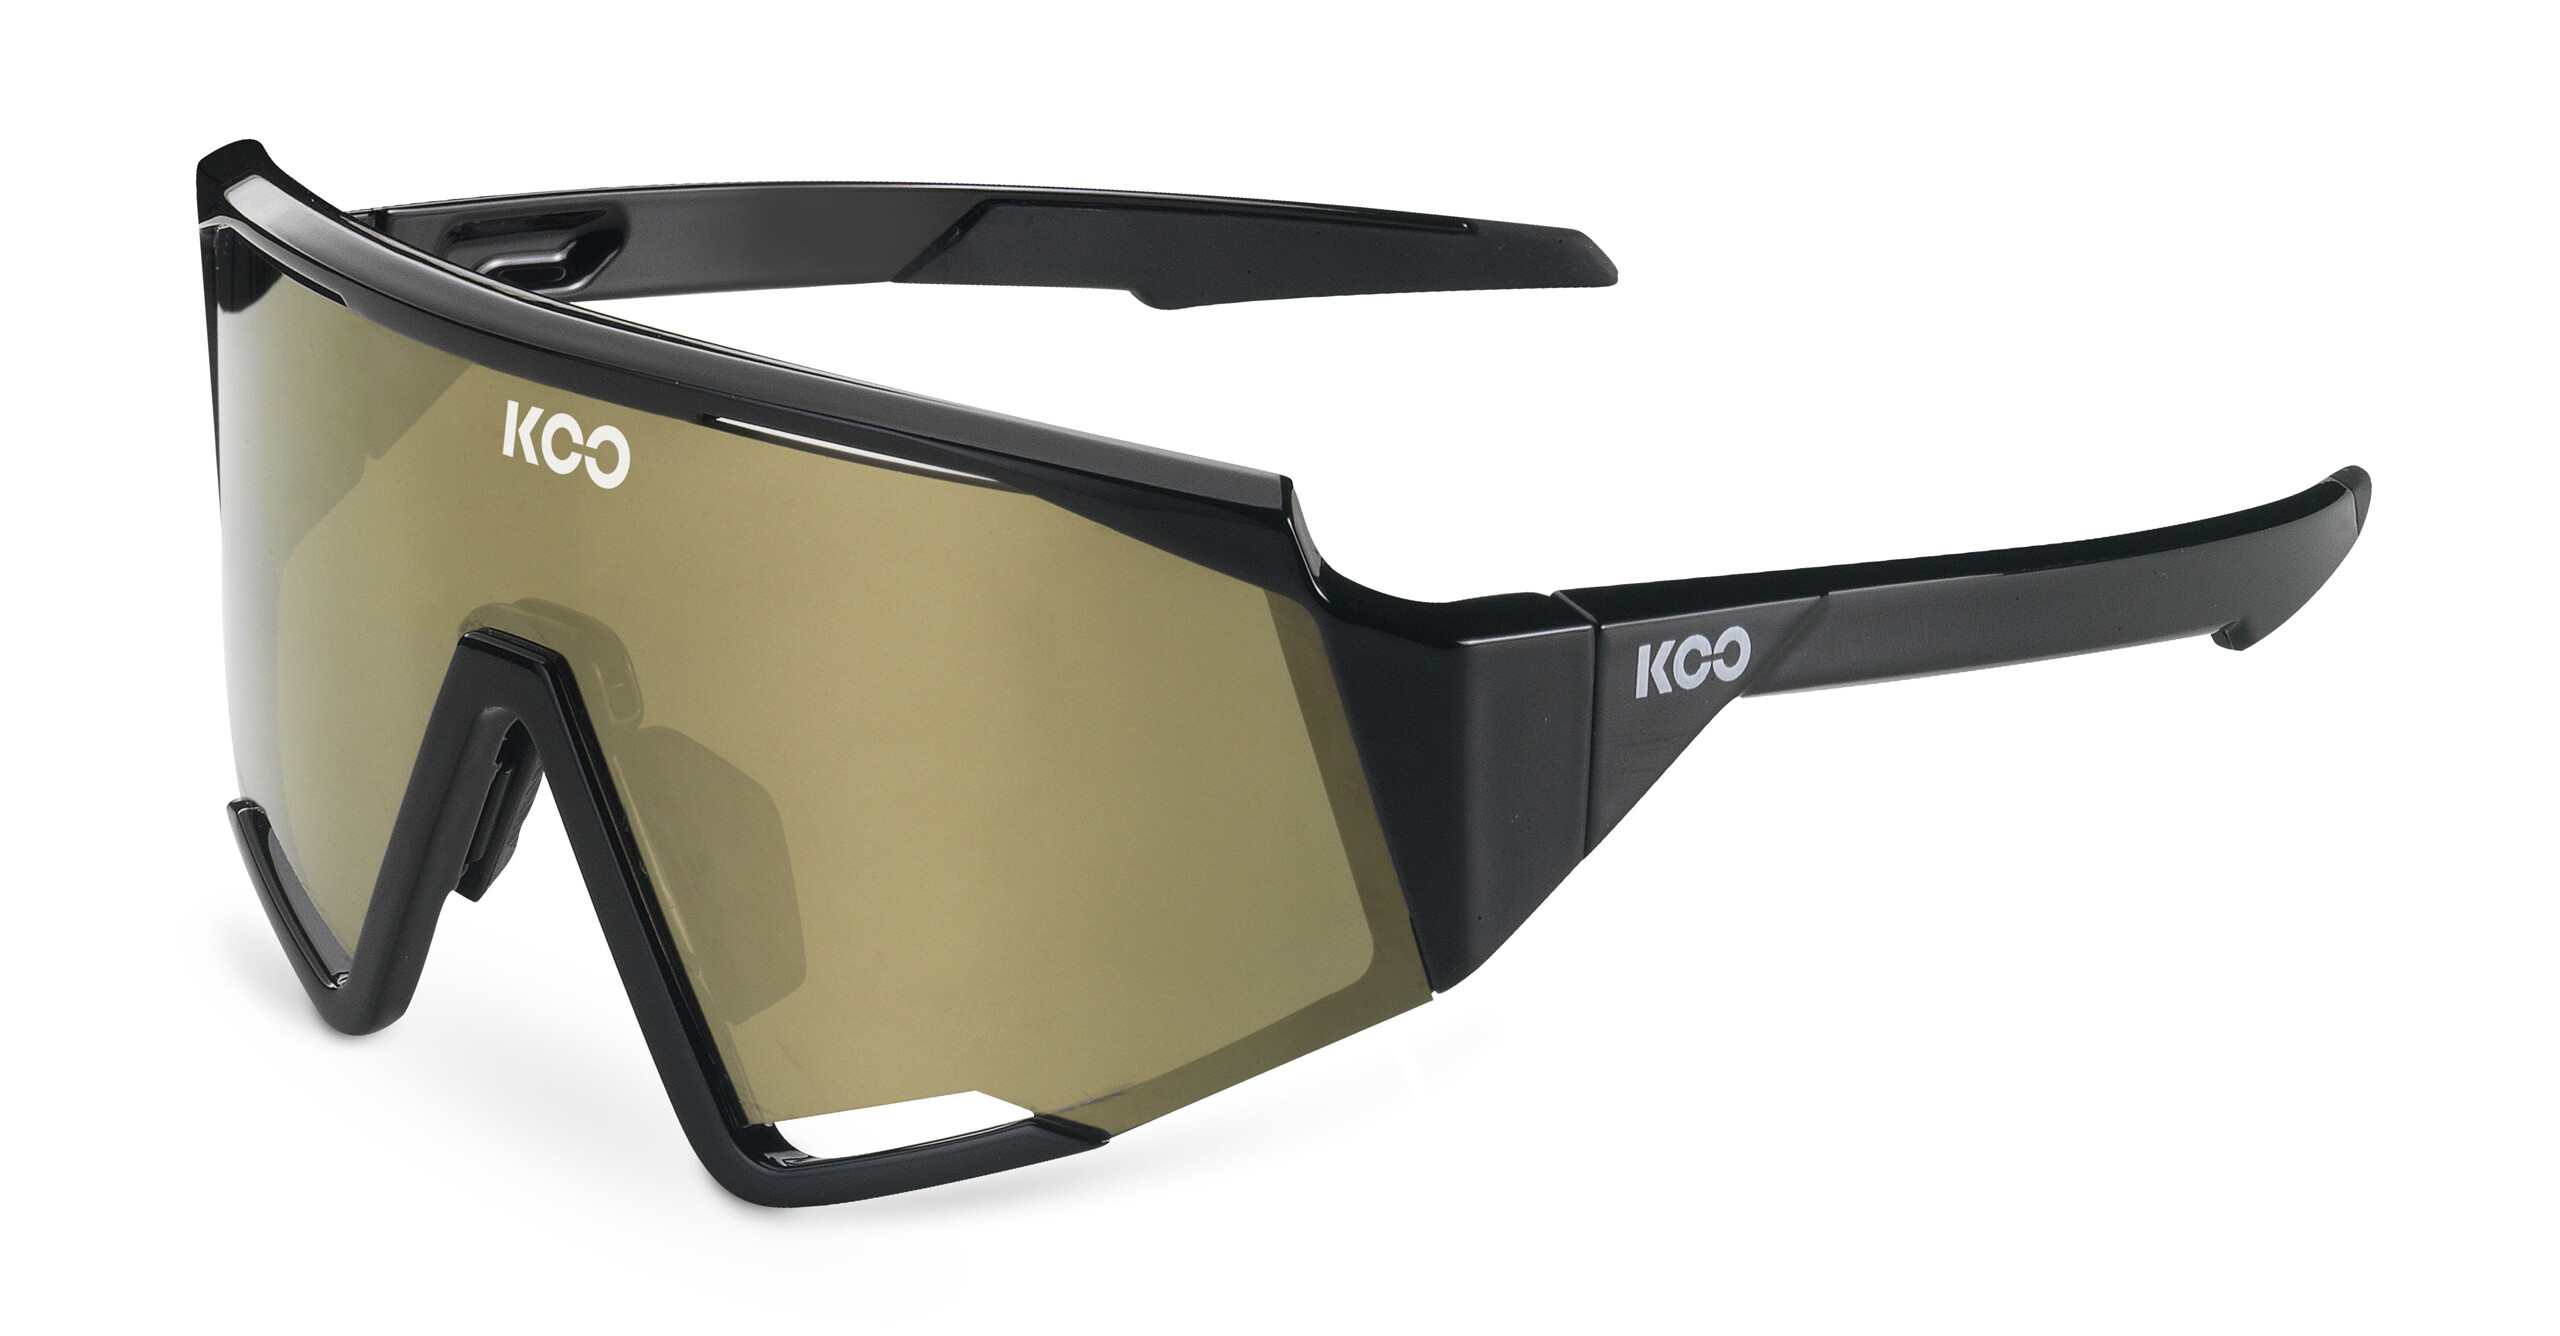 Review: Koo Demos glasses